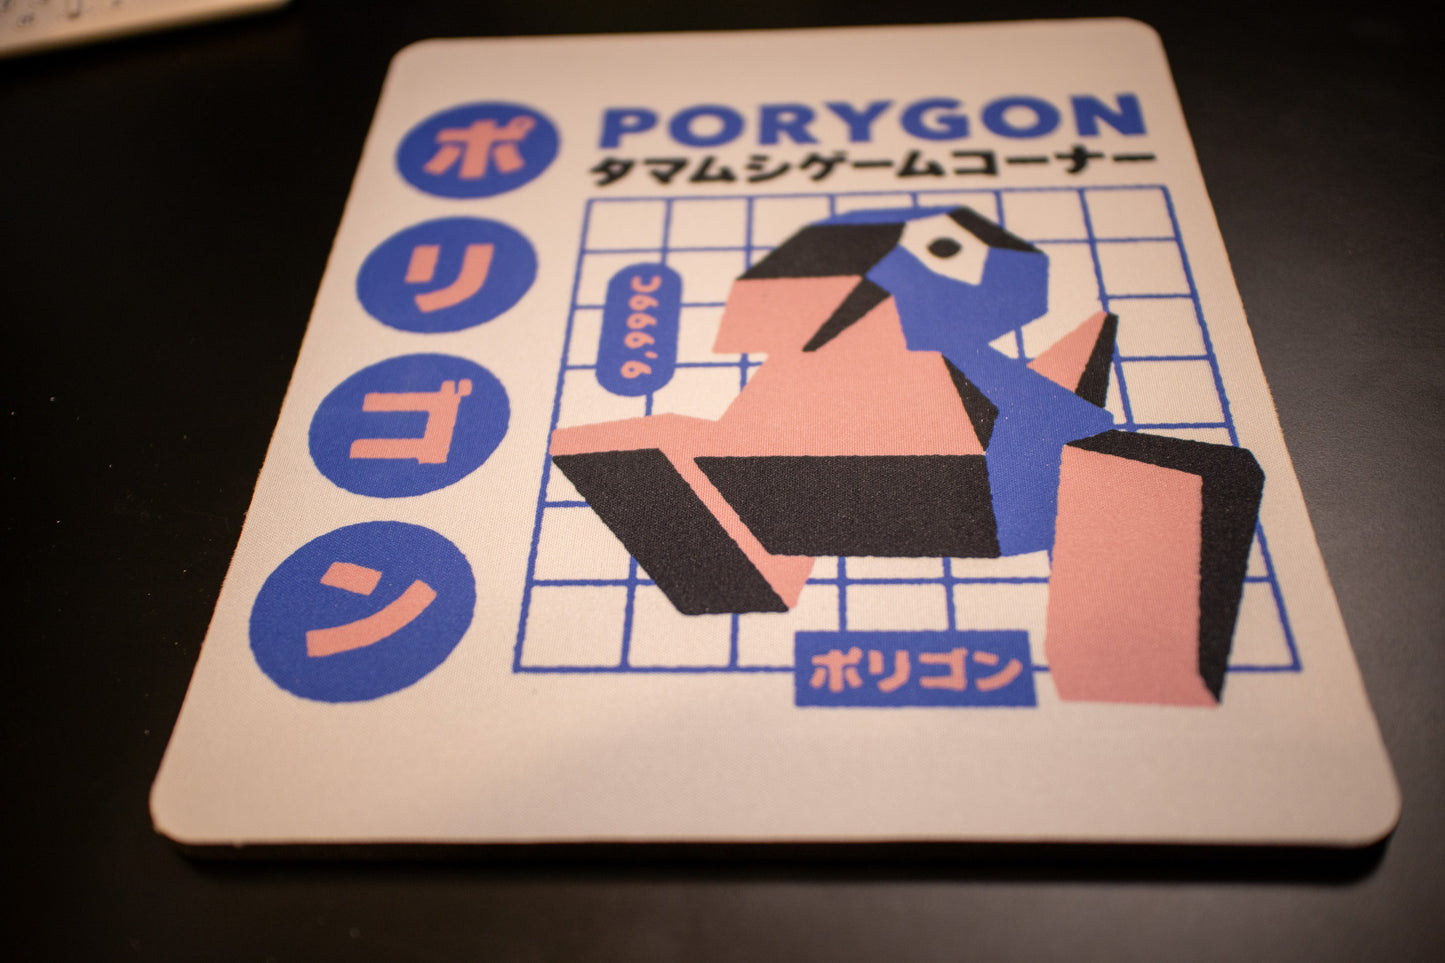 Shiny Porygon Advertisement Mouse Pad